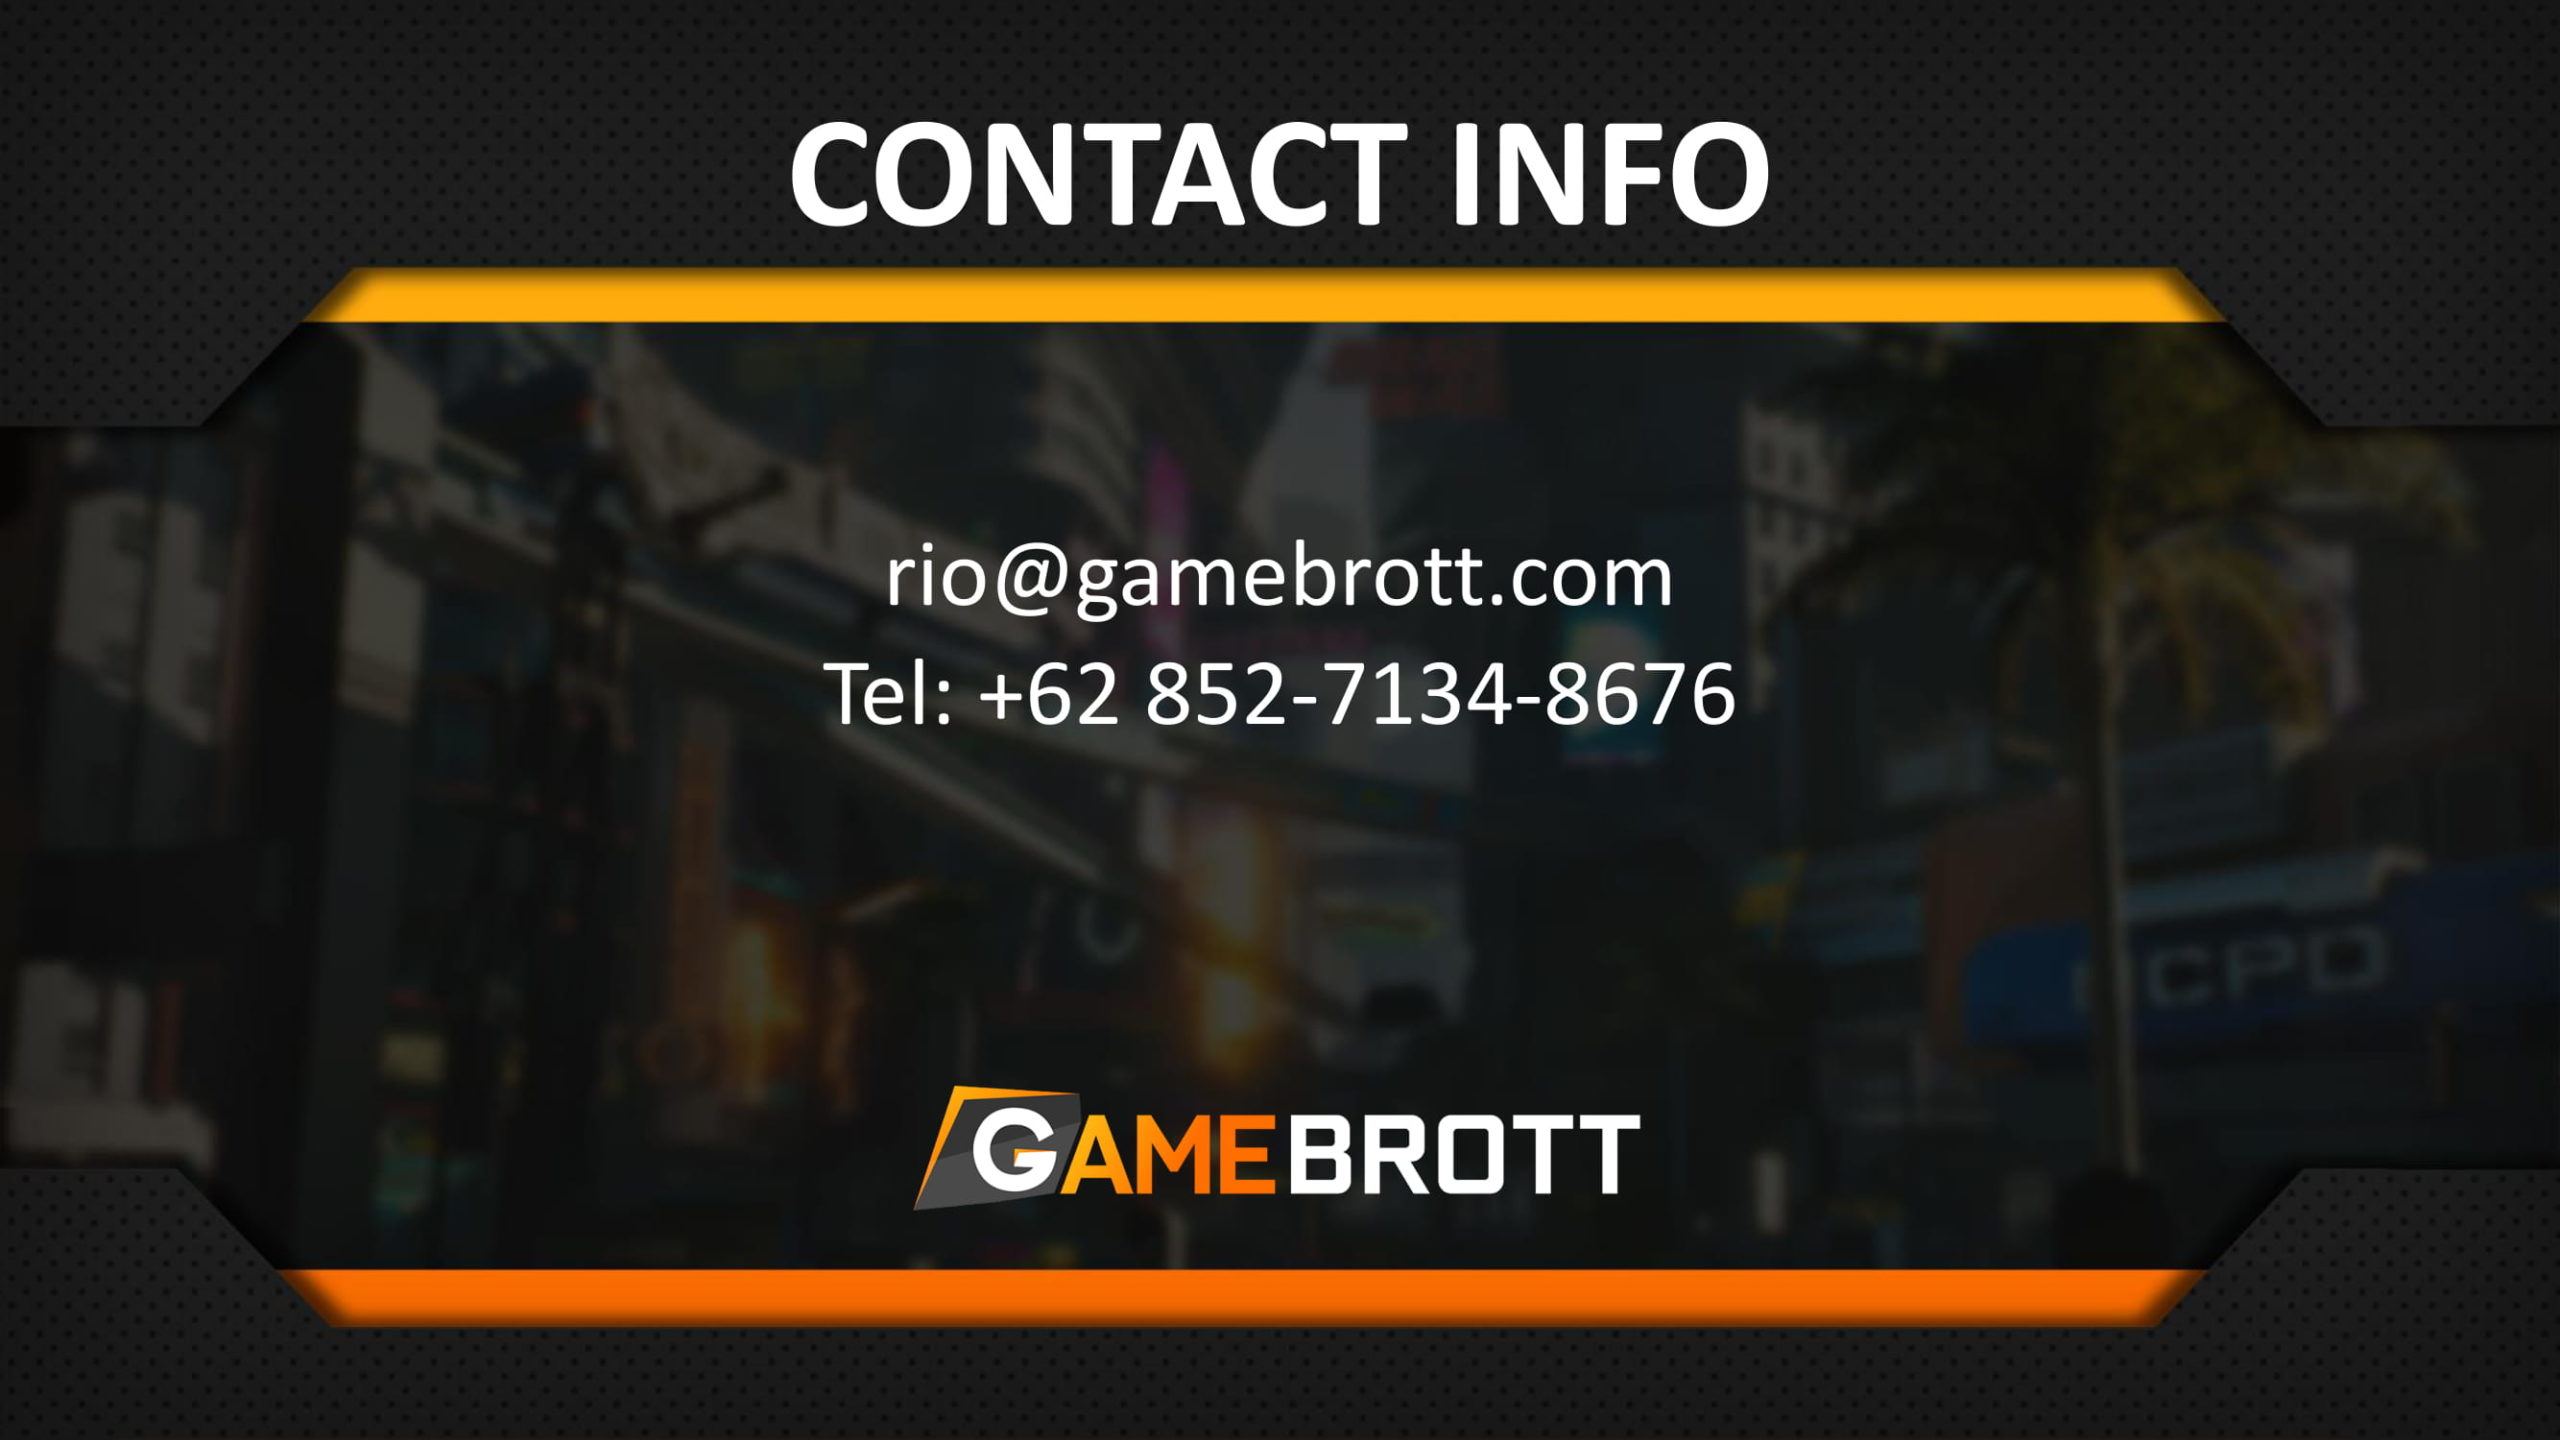 Gamebrott 2020 Rate Card En 32